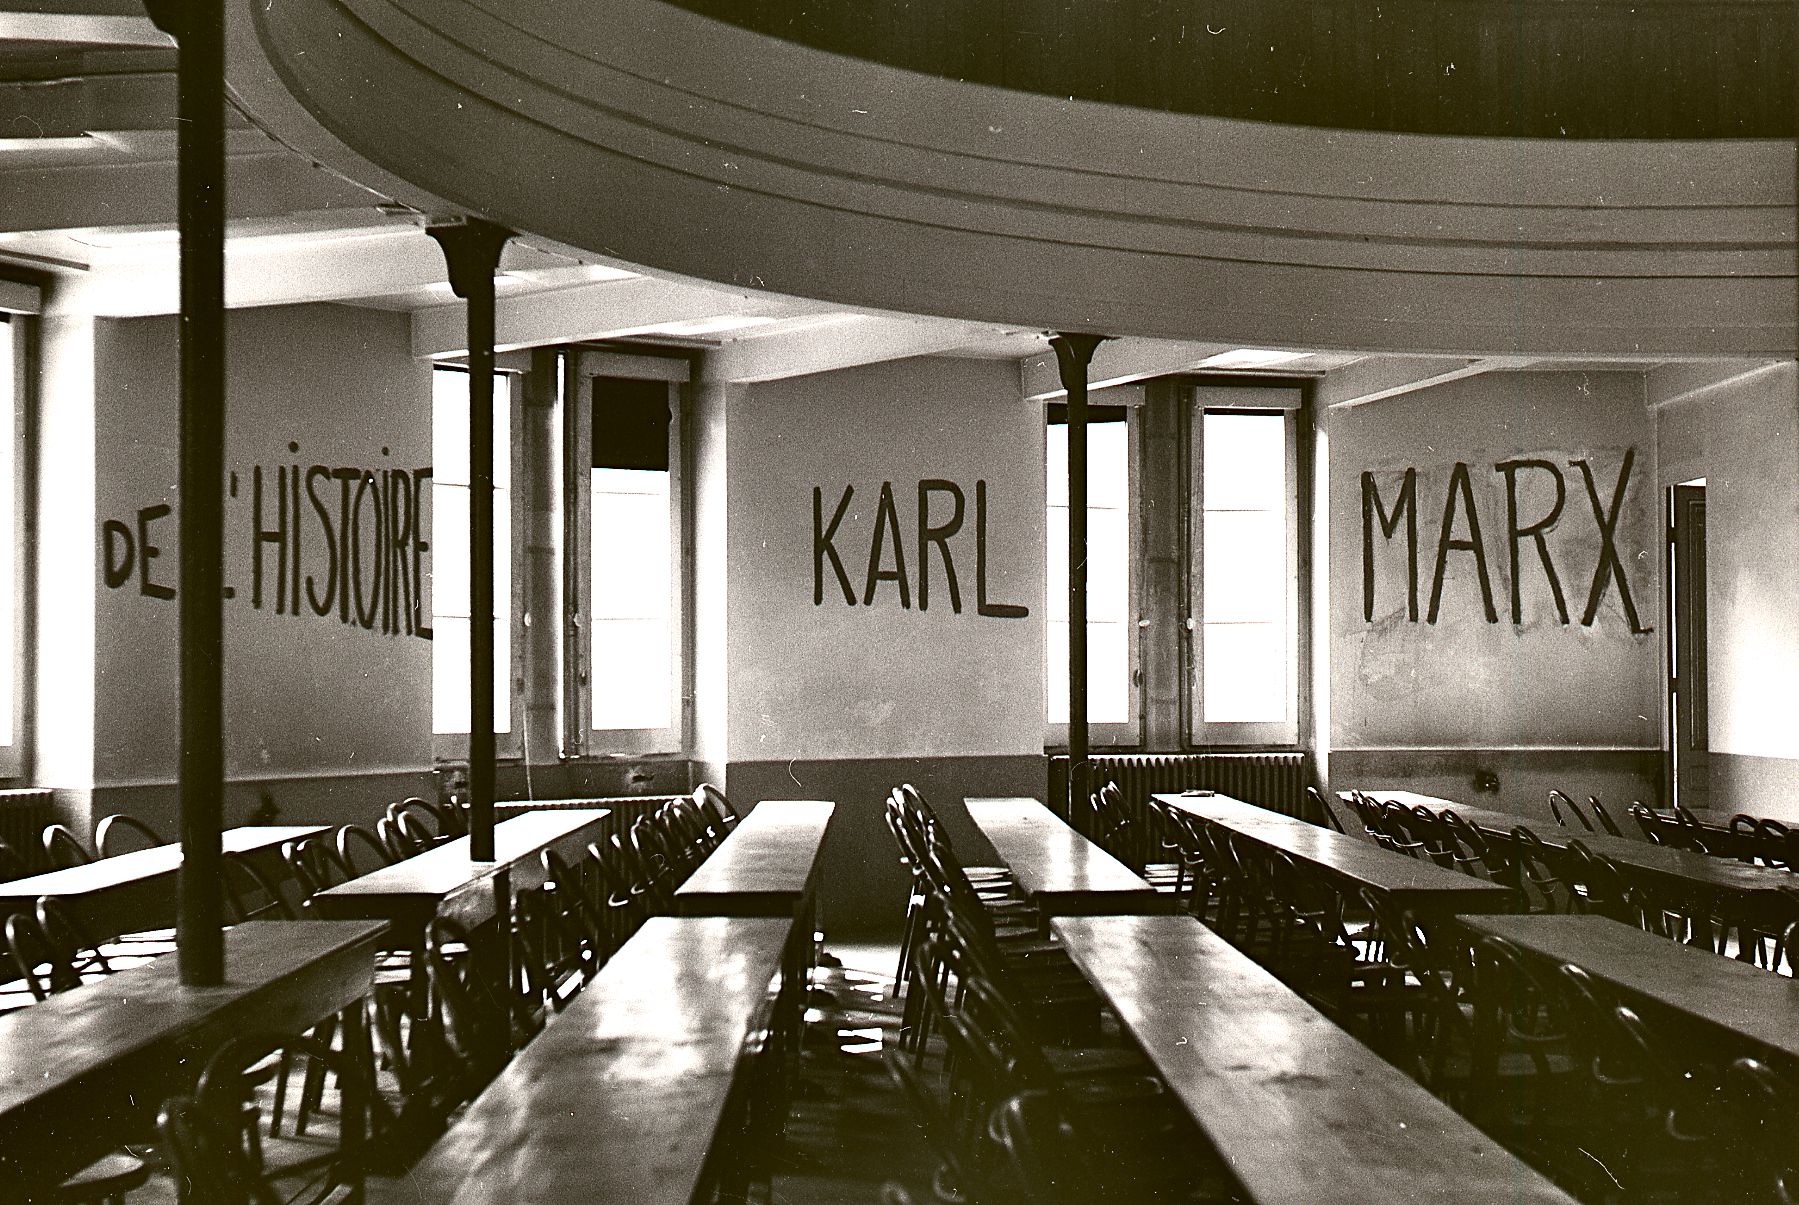 Graffito in University of Lyon classroom during student revolt of 1968 Image public domain